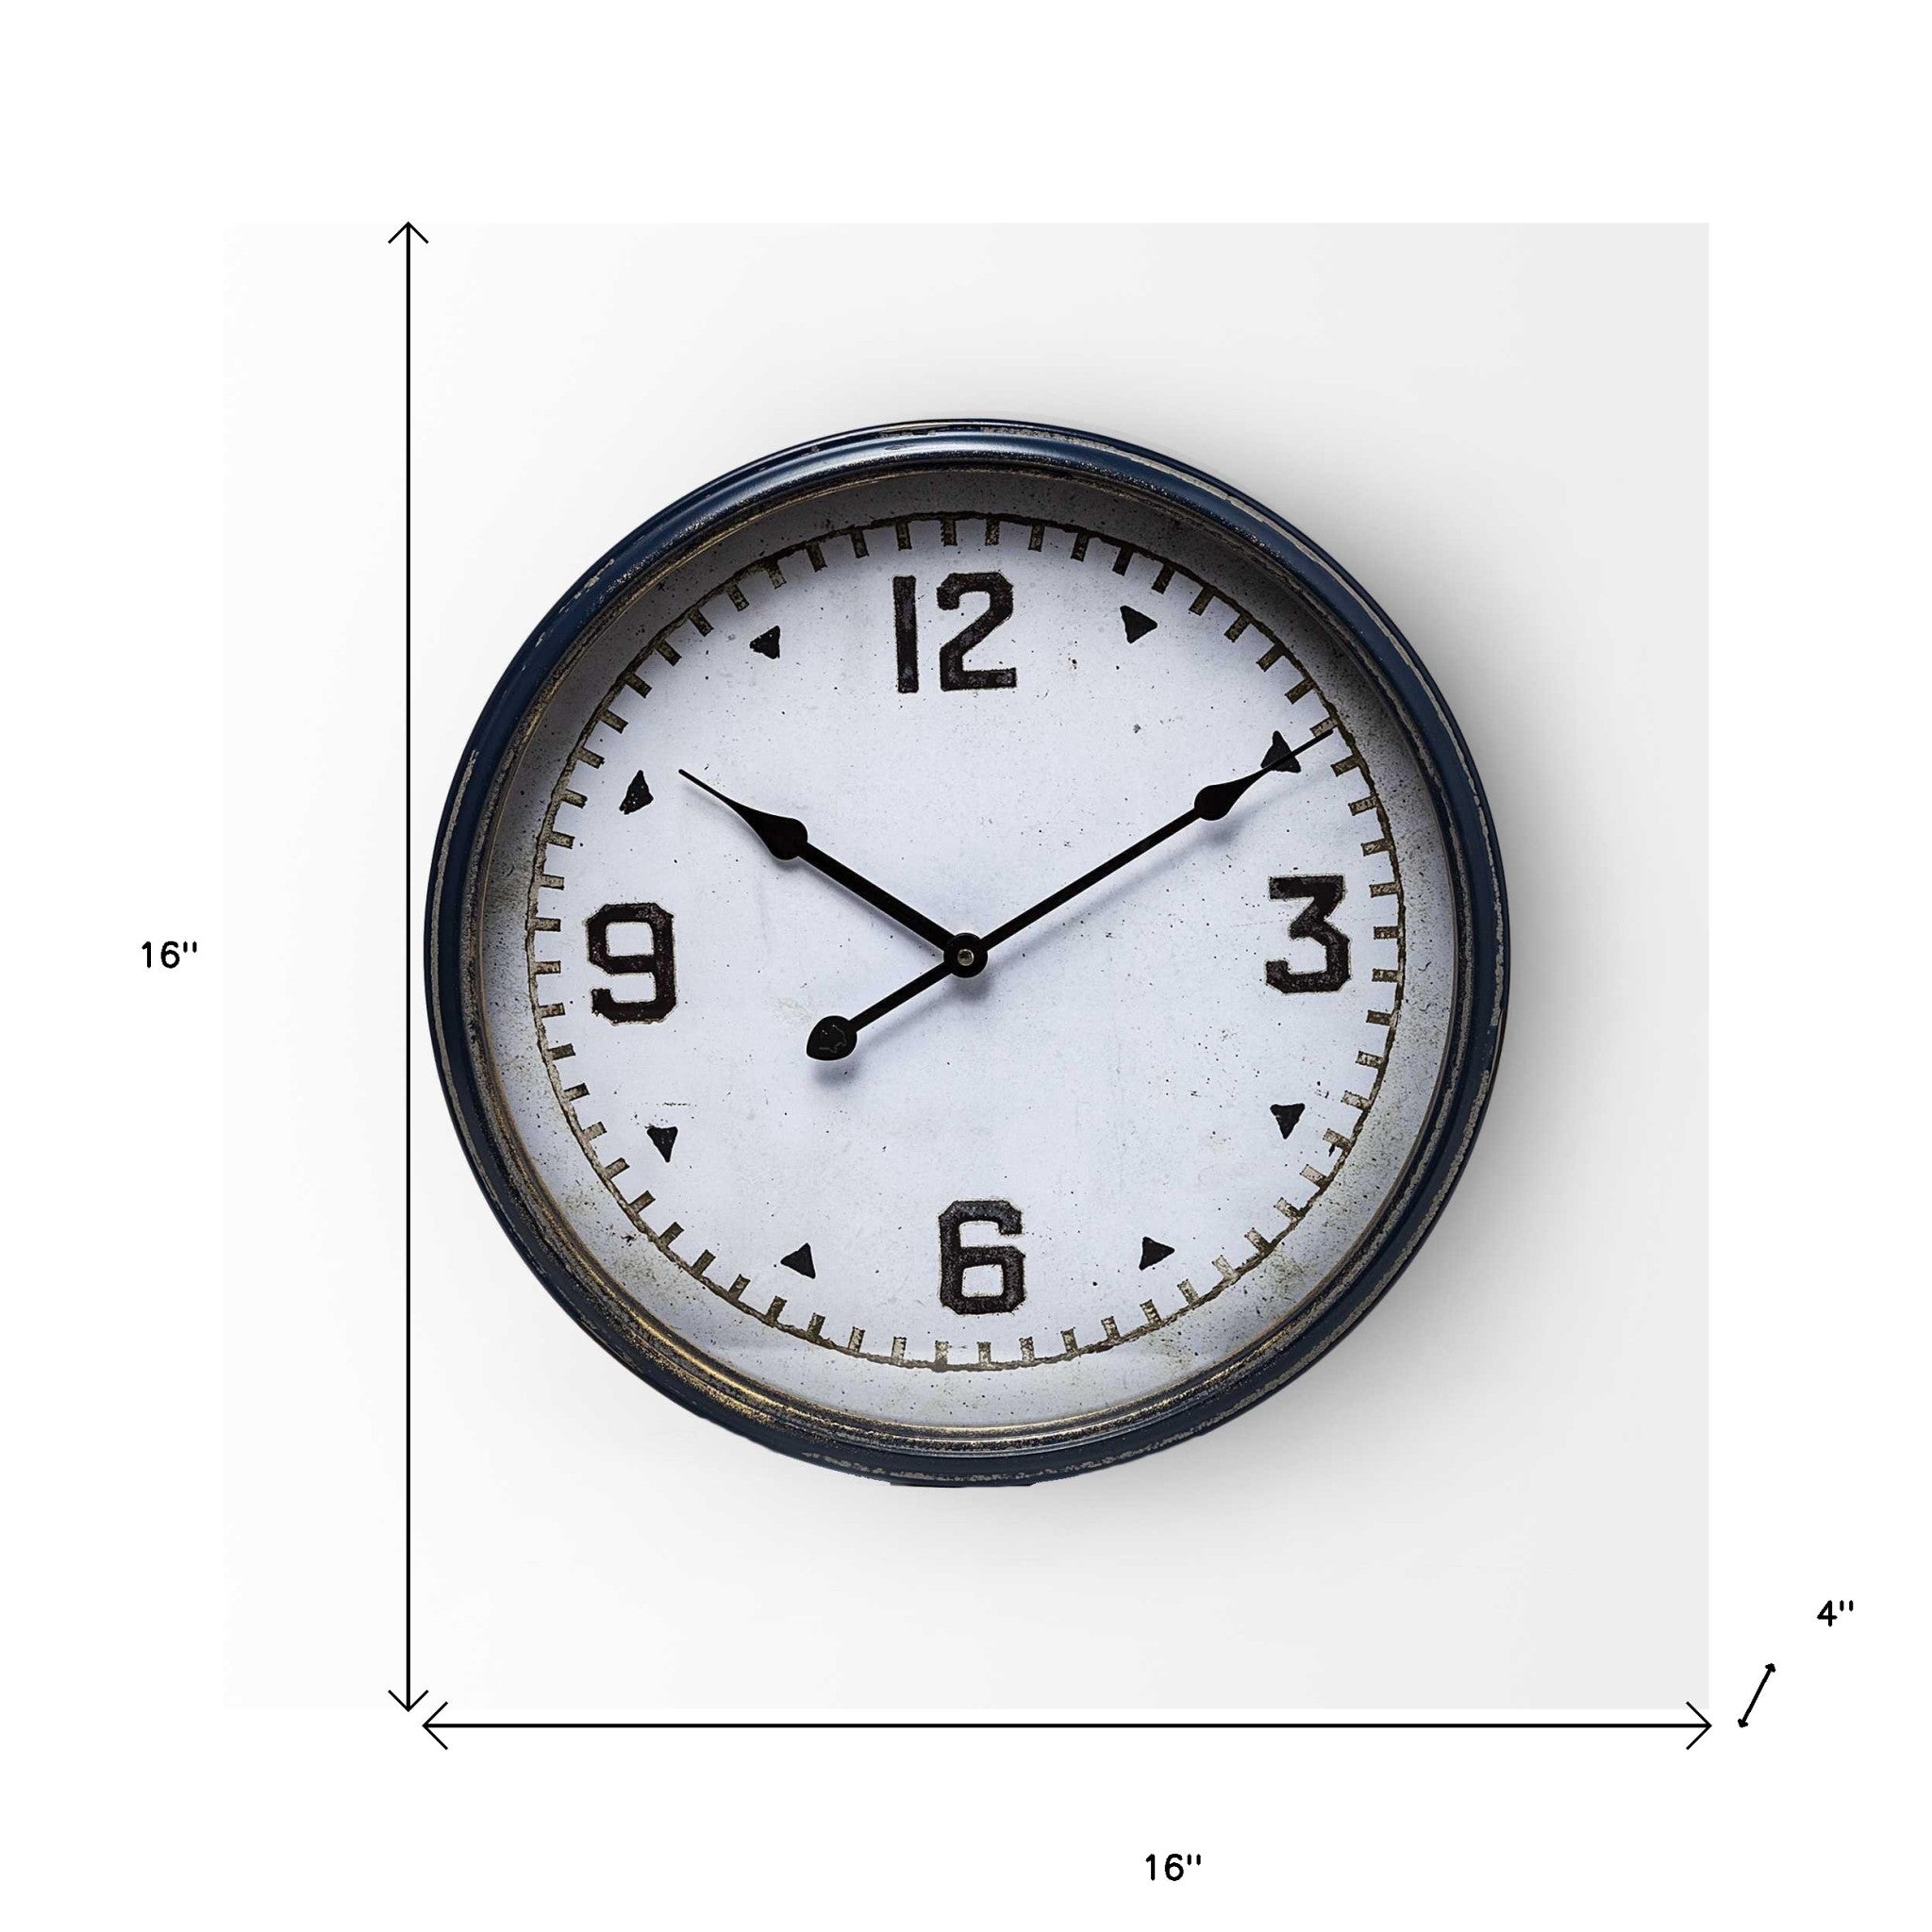 16" Circle Blue Glass Analog Wall Clock